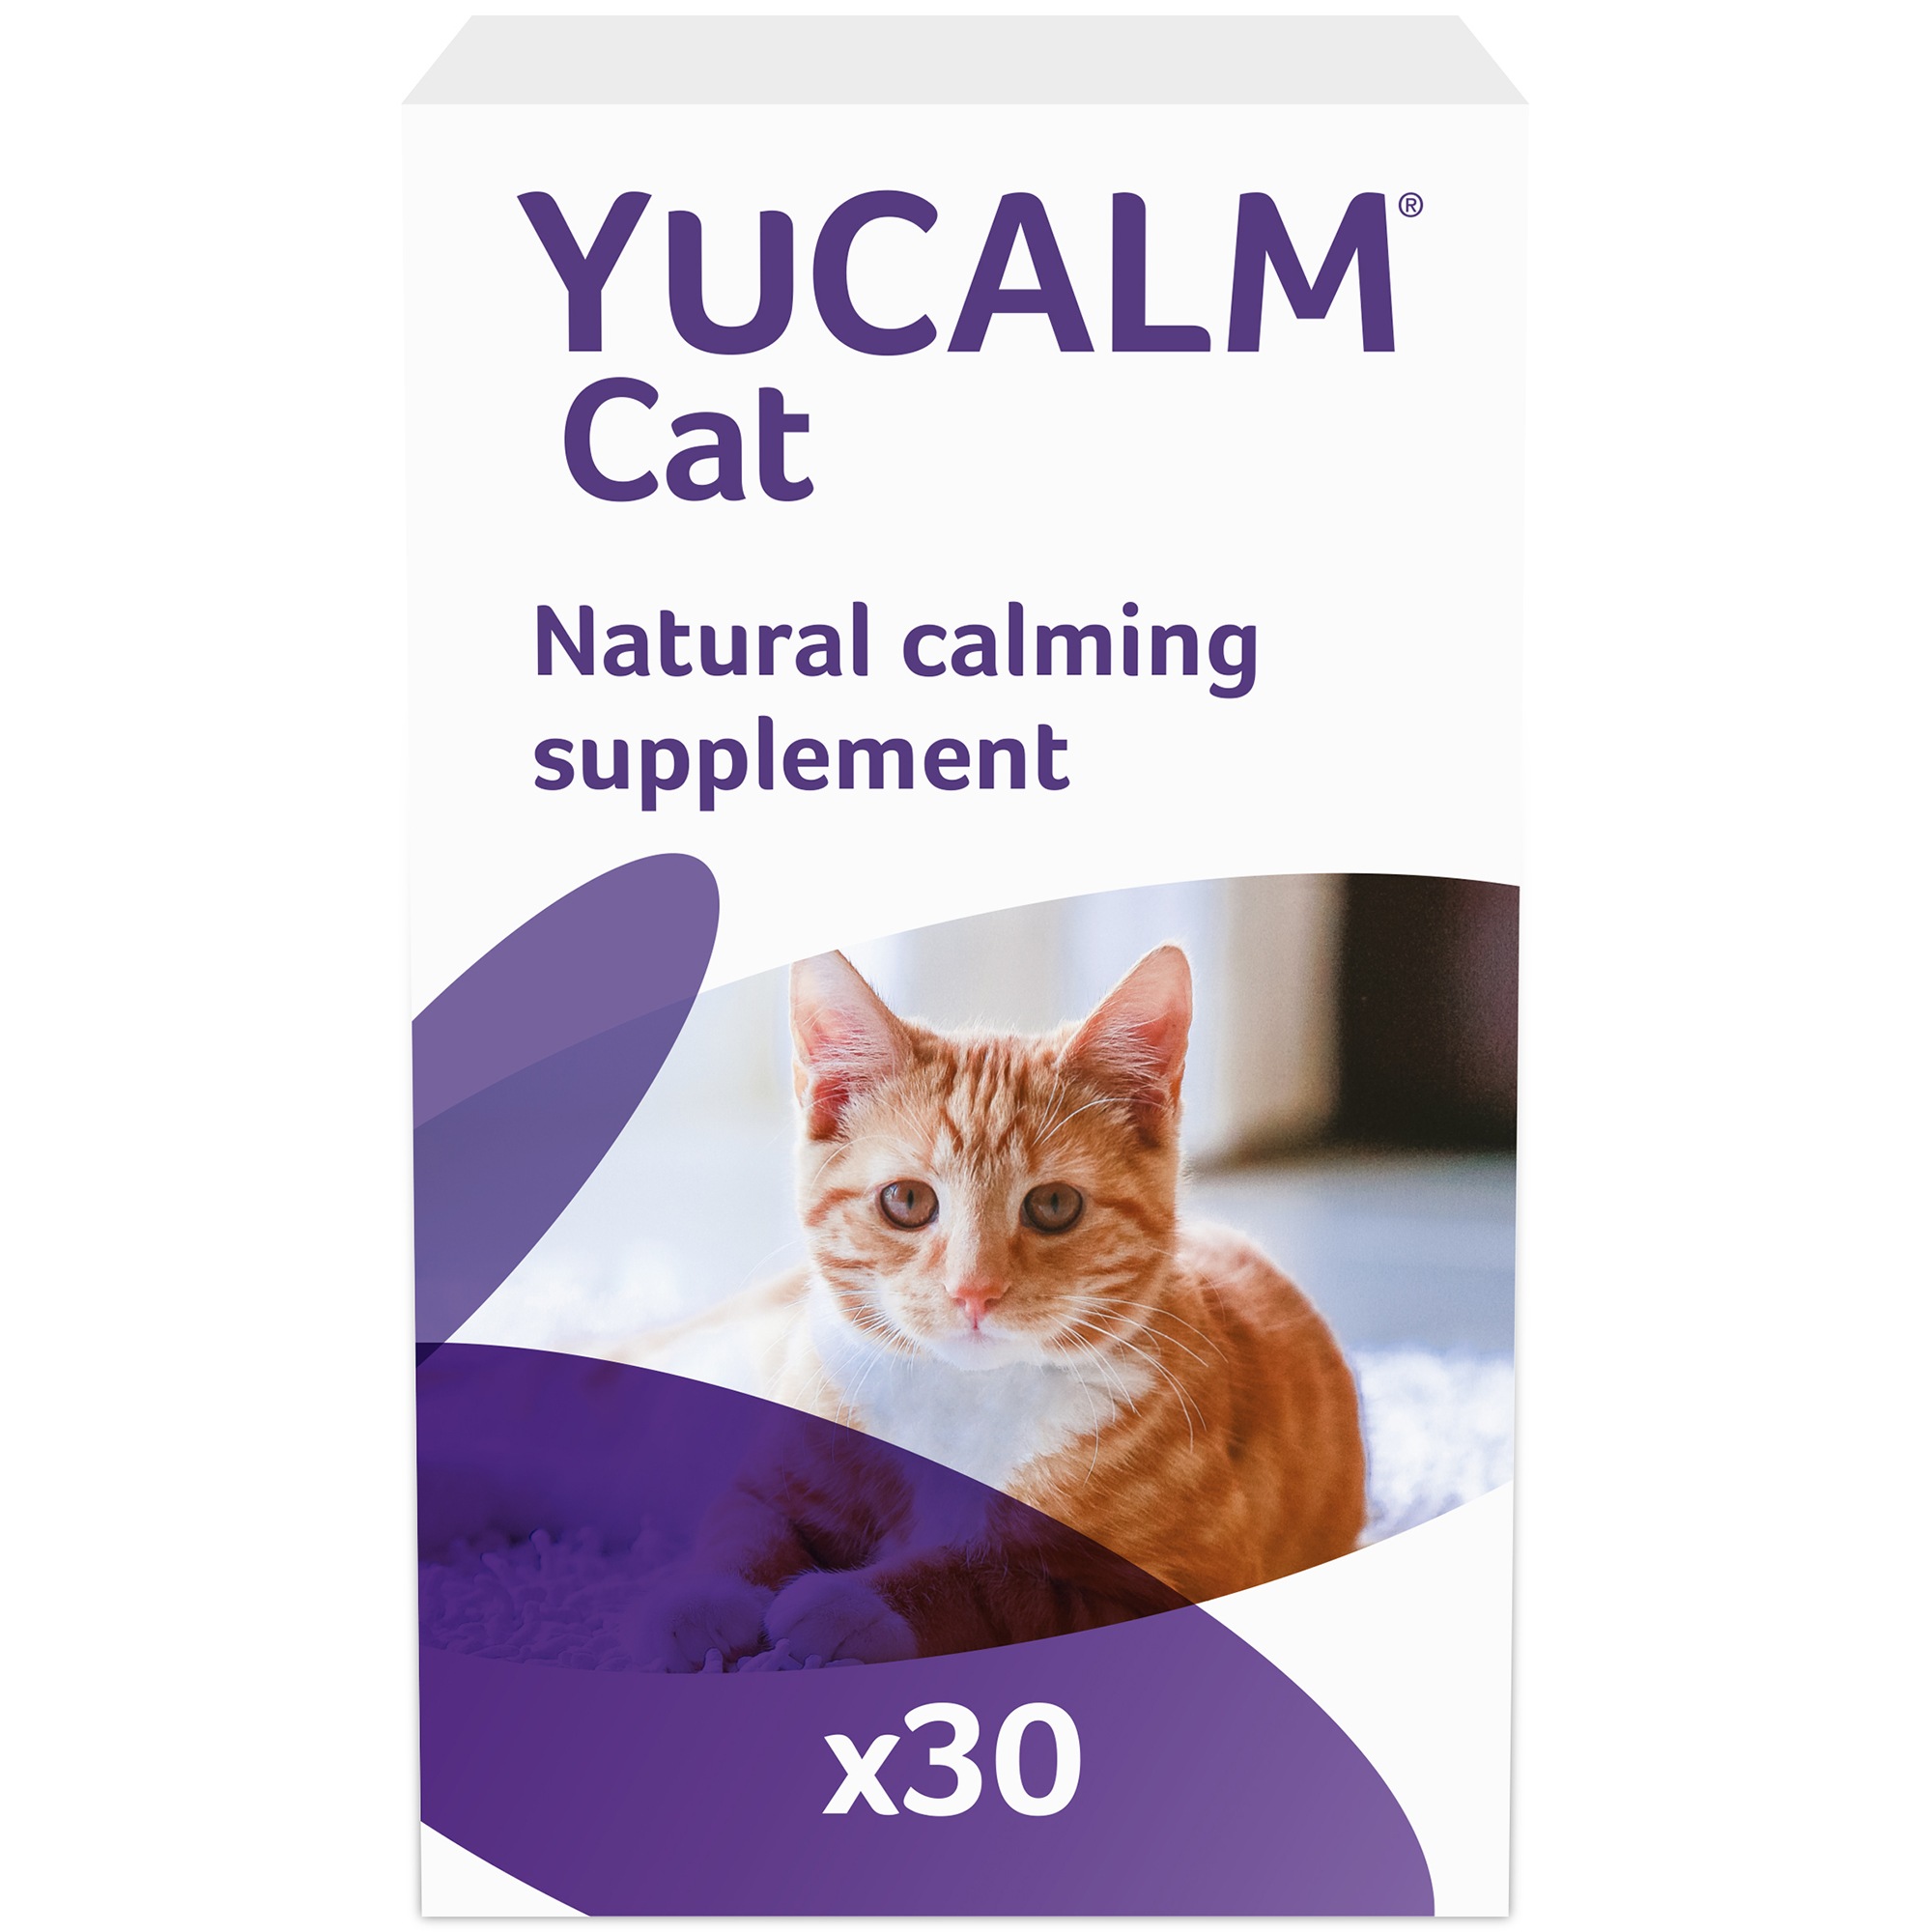 YuCALM Cat Natural Supplement Calming Stress VioVet.co.uk